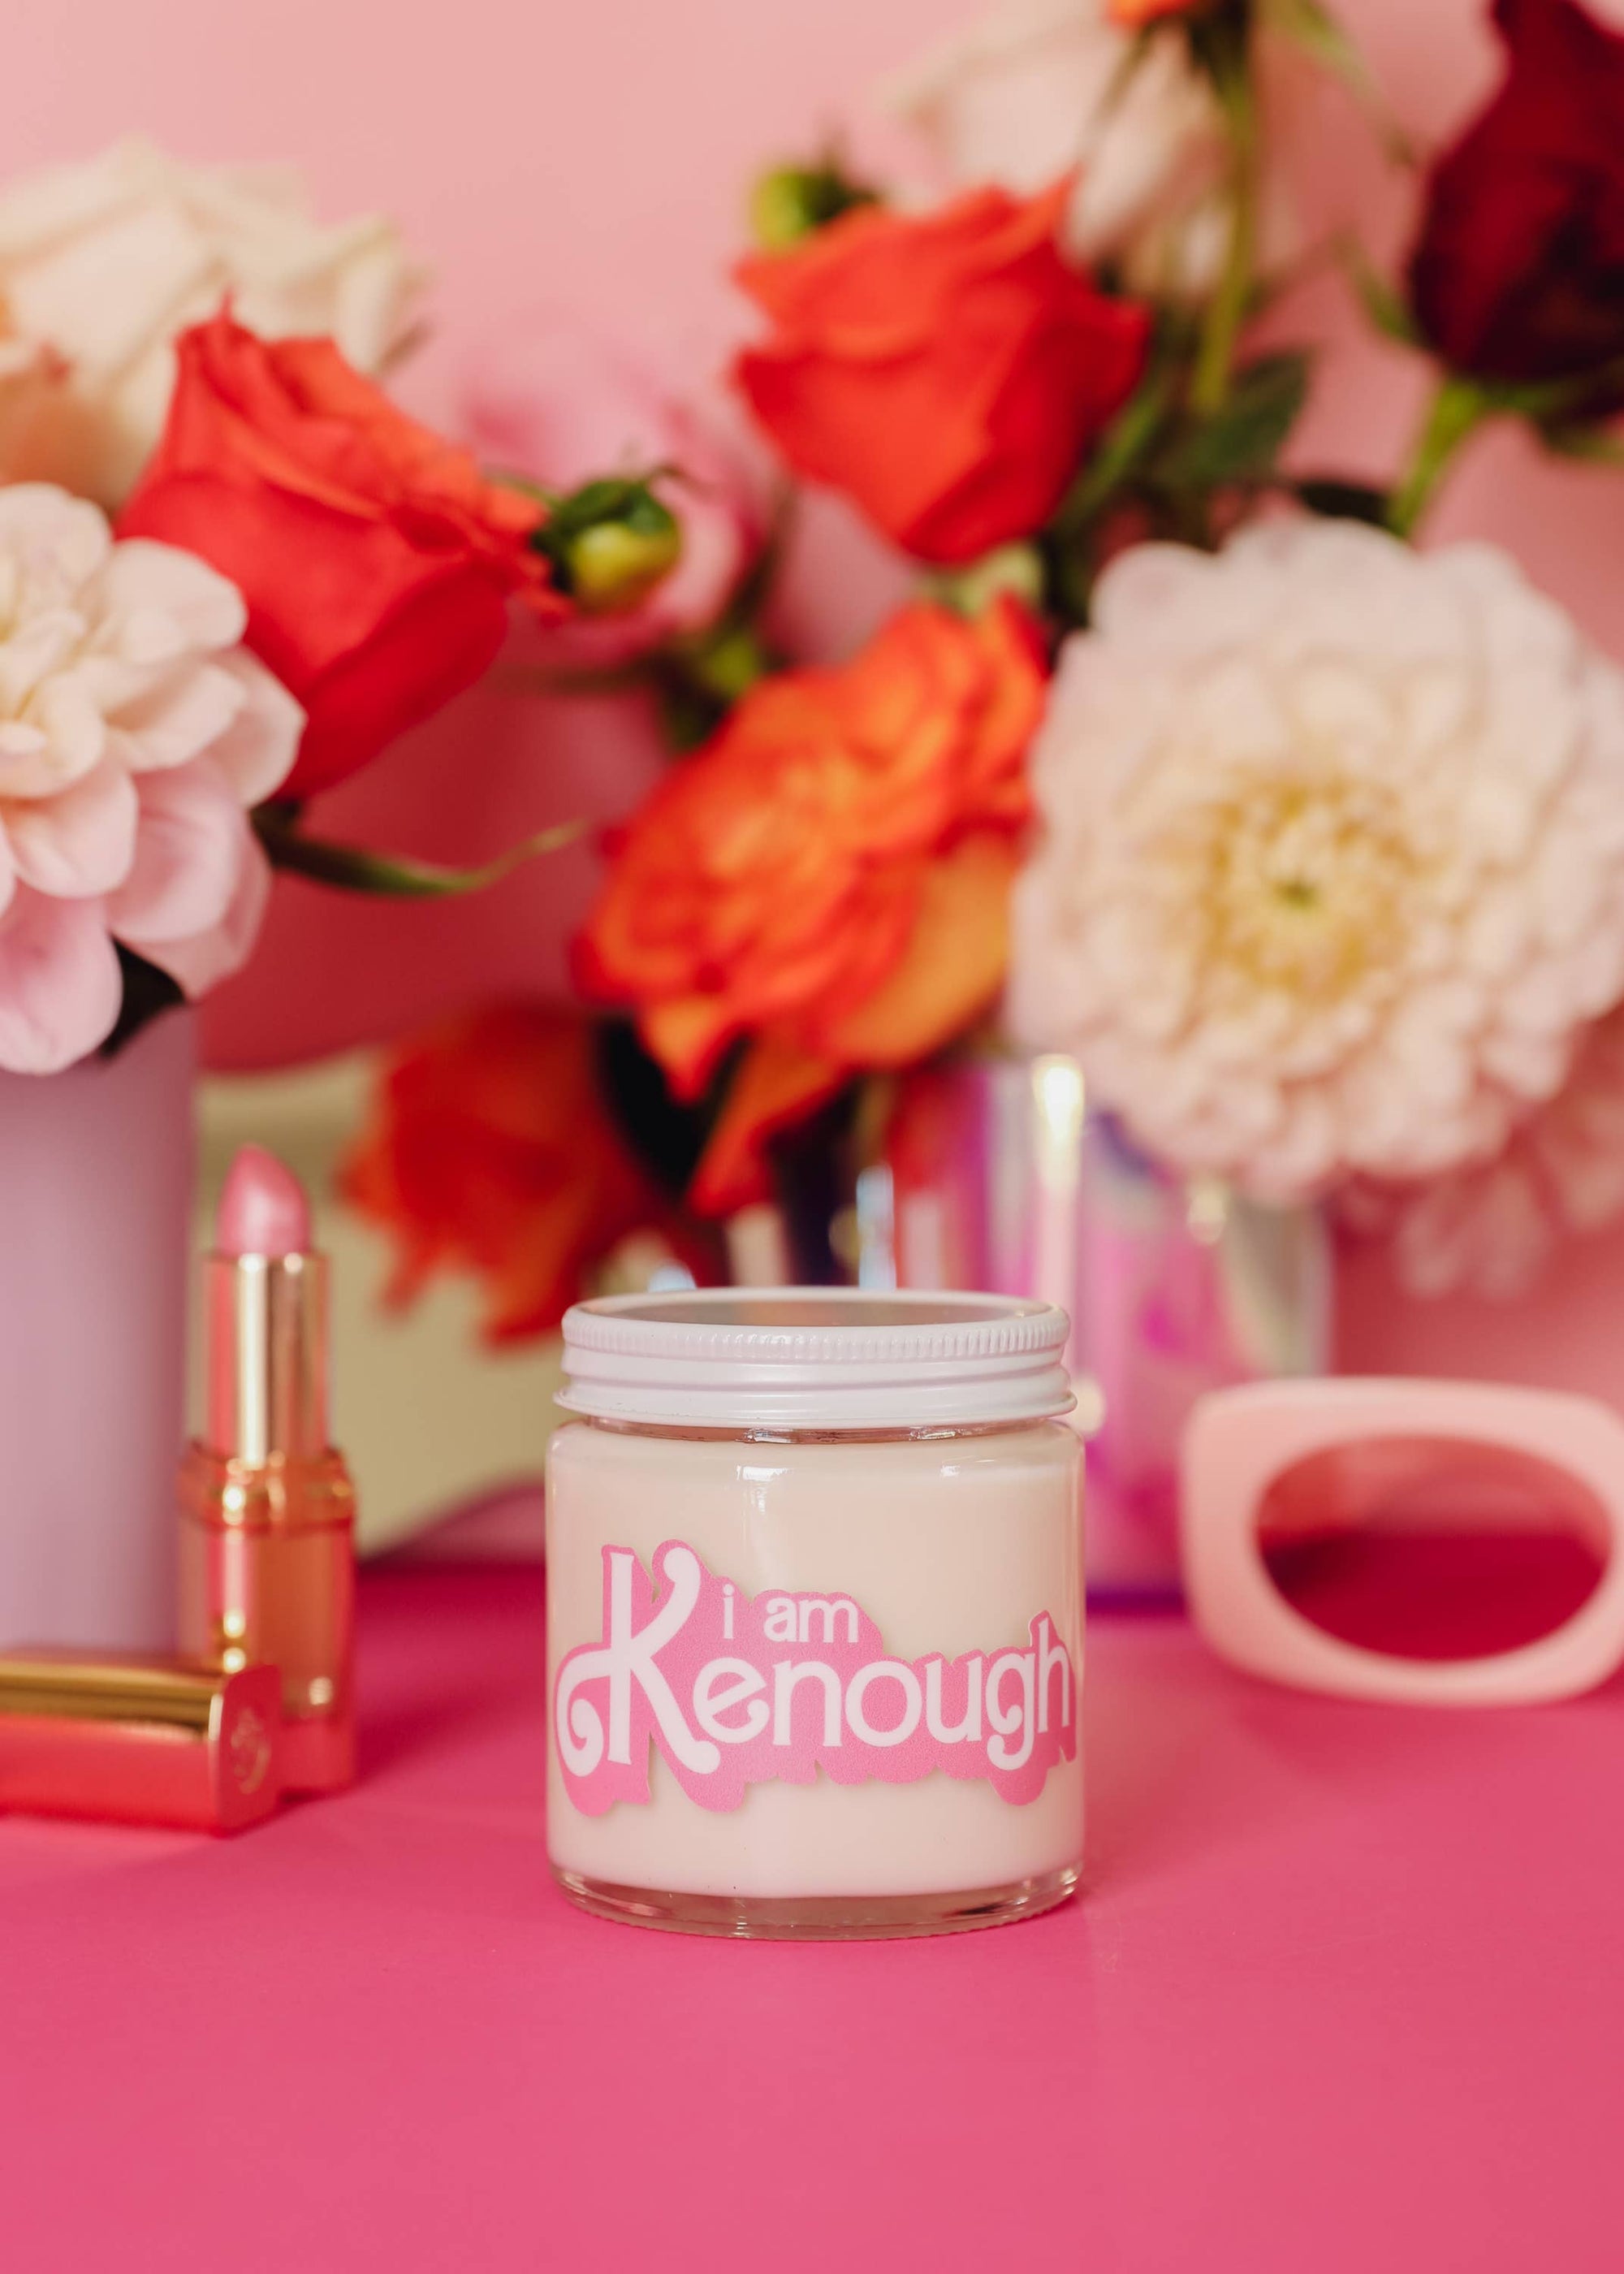 Barbie - I am Kenough Candle - Cream